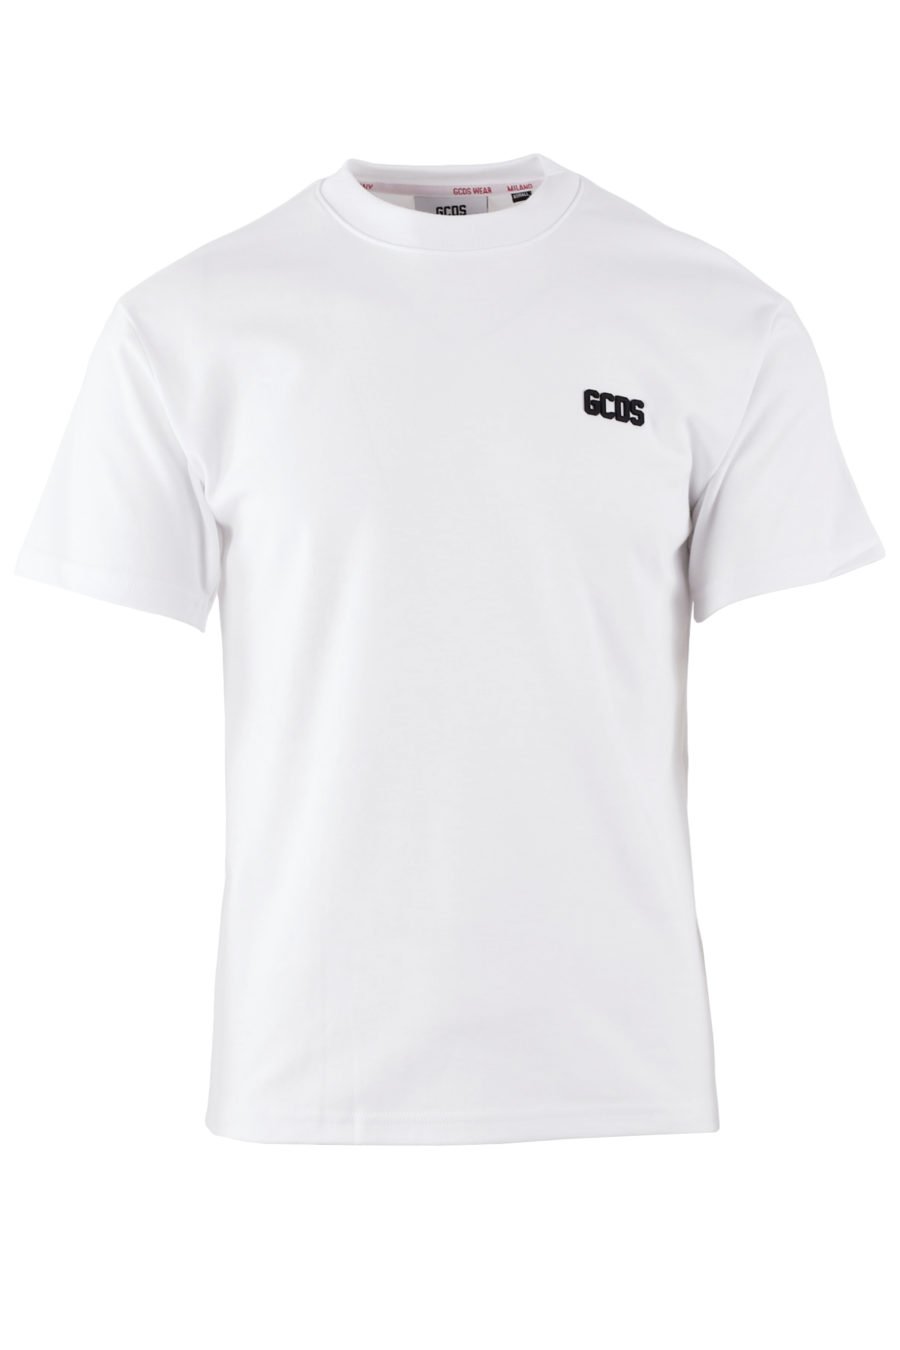 Camiseta blanca con logo pequeño negro - IMG 7657